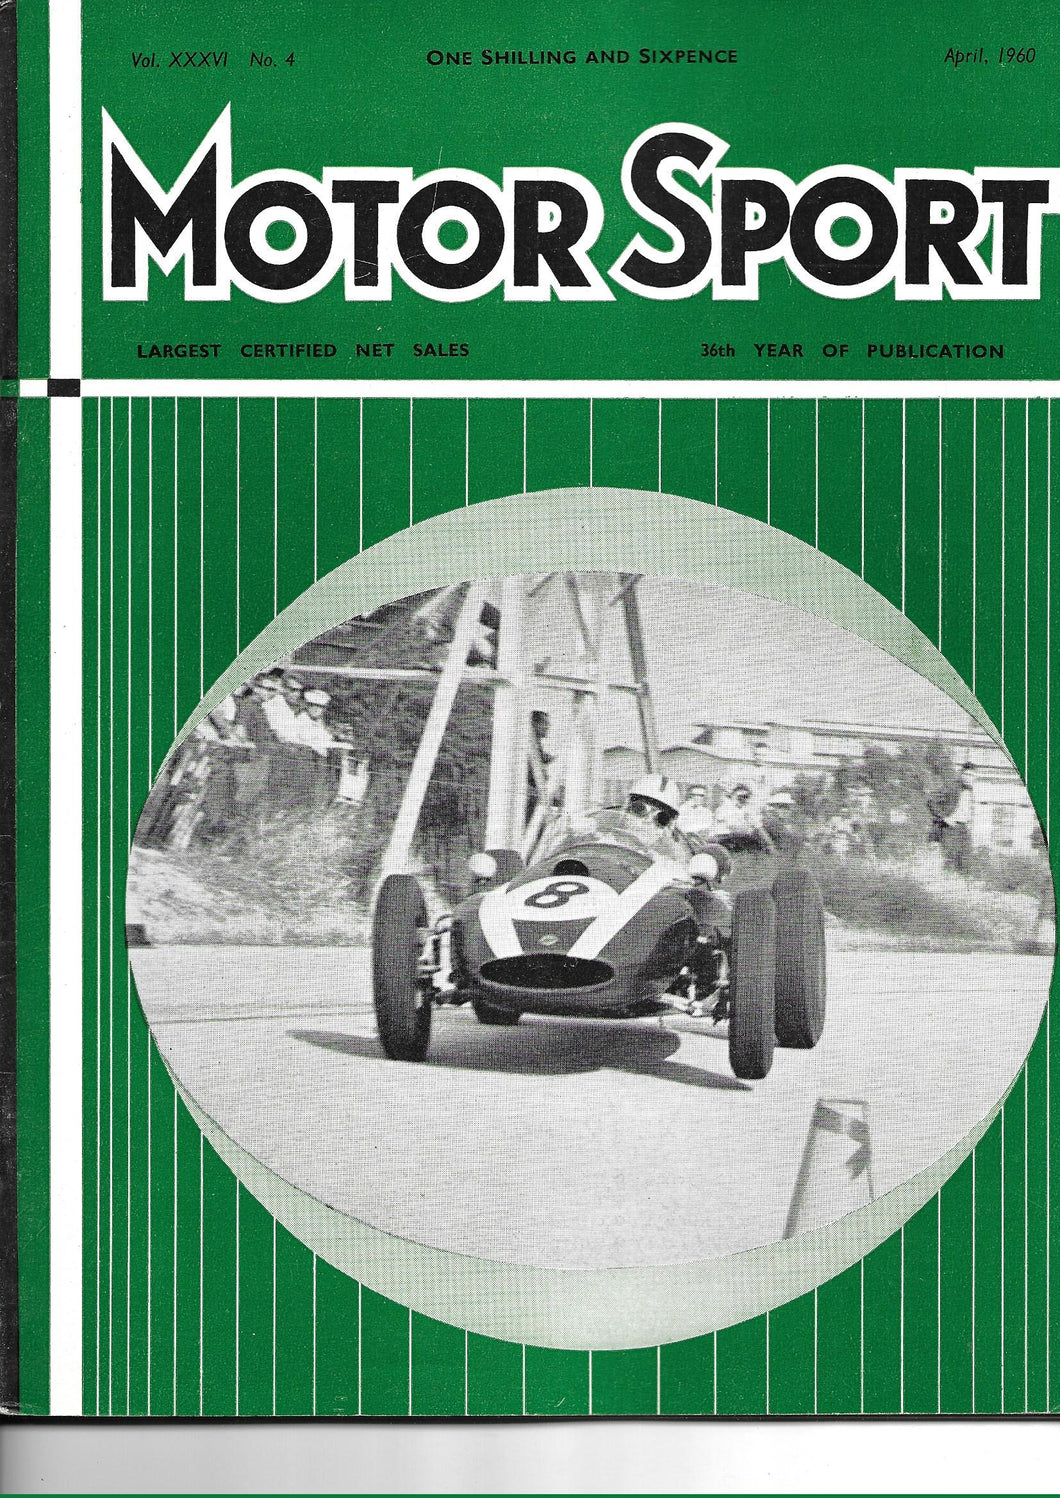 Motor Sport, Motorsport, Magazine, Vol XXXVI April 1960, Very Good Condition